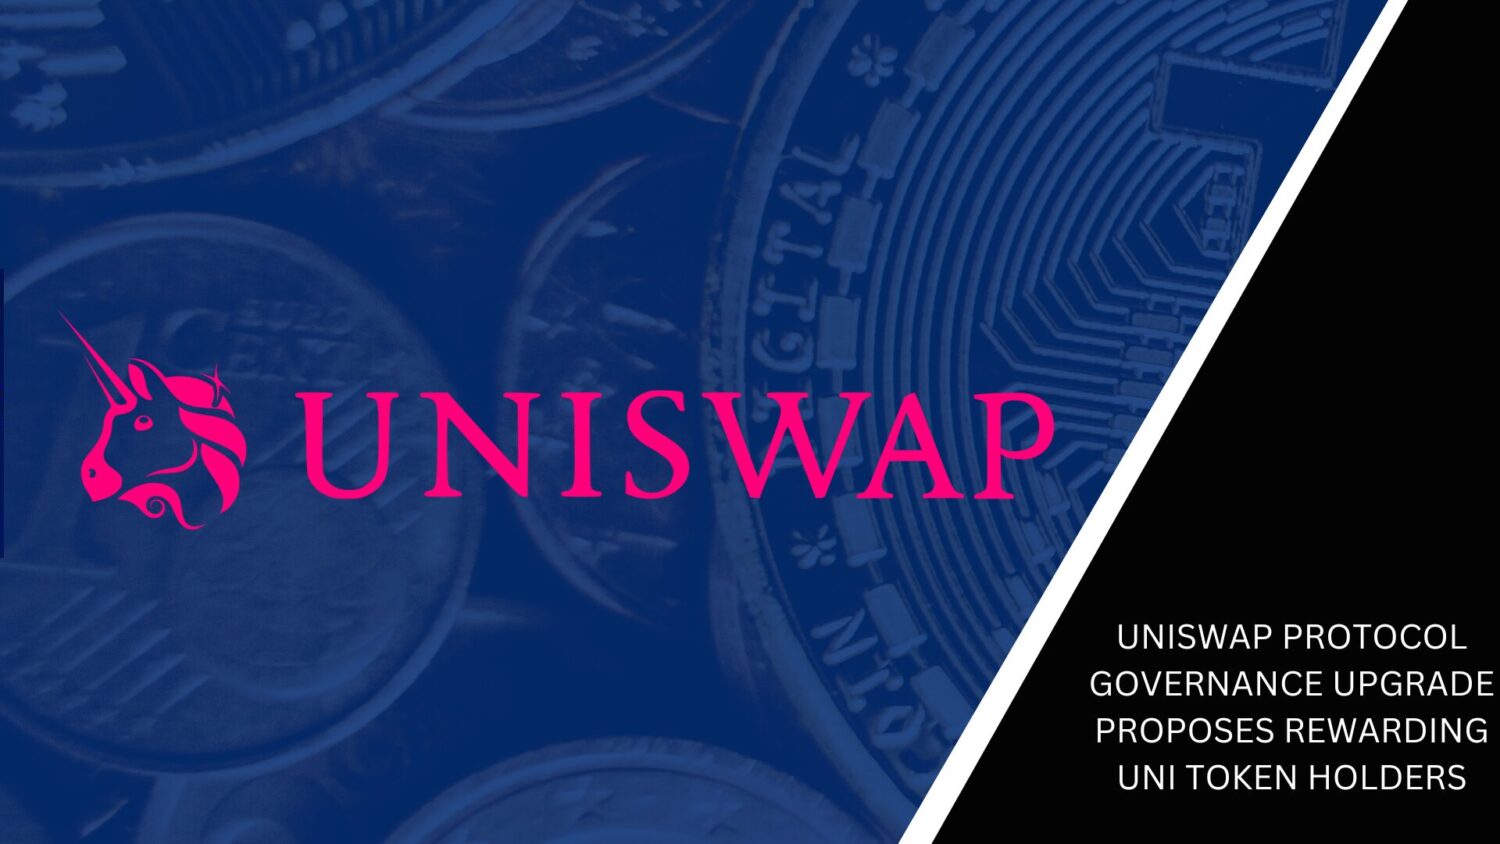 Uniswap Protocol Governance Upgrade Proposes Rewarding Uni Token Holders